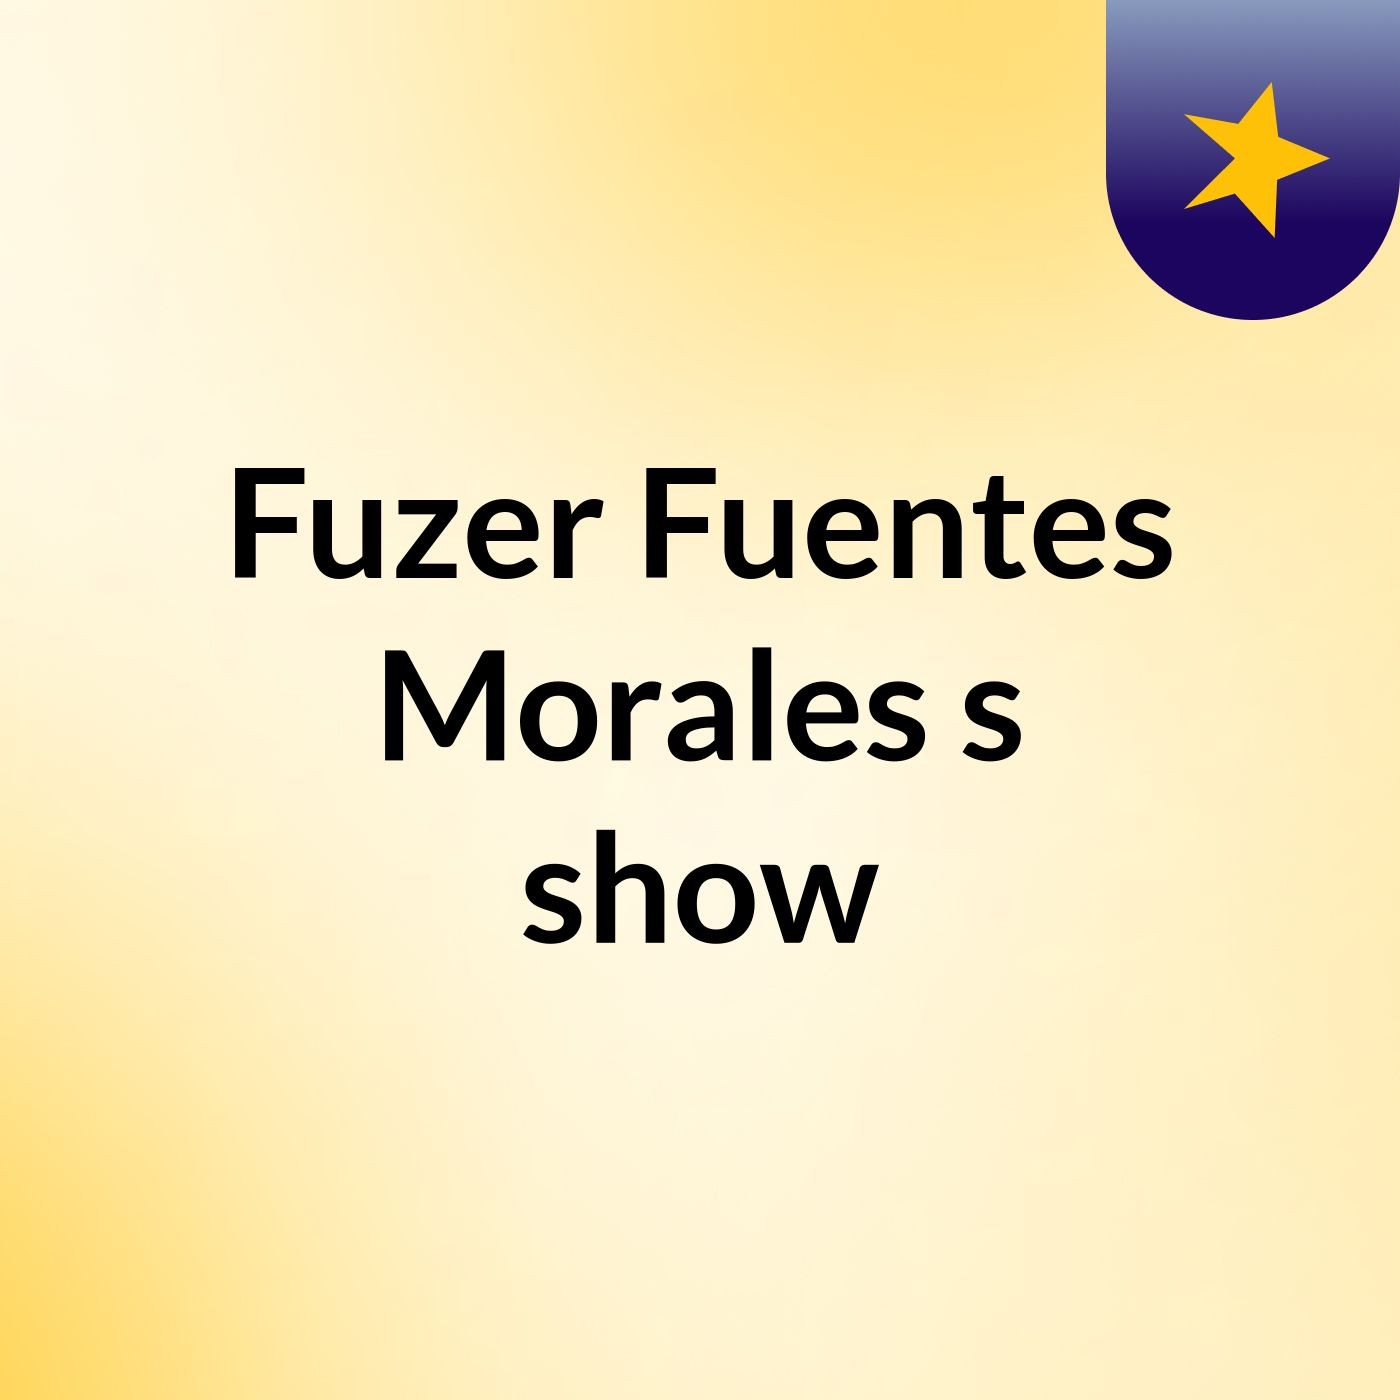 Fuzer Fuentes Morales's show